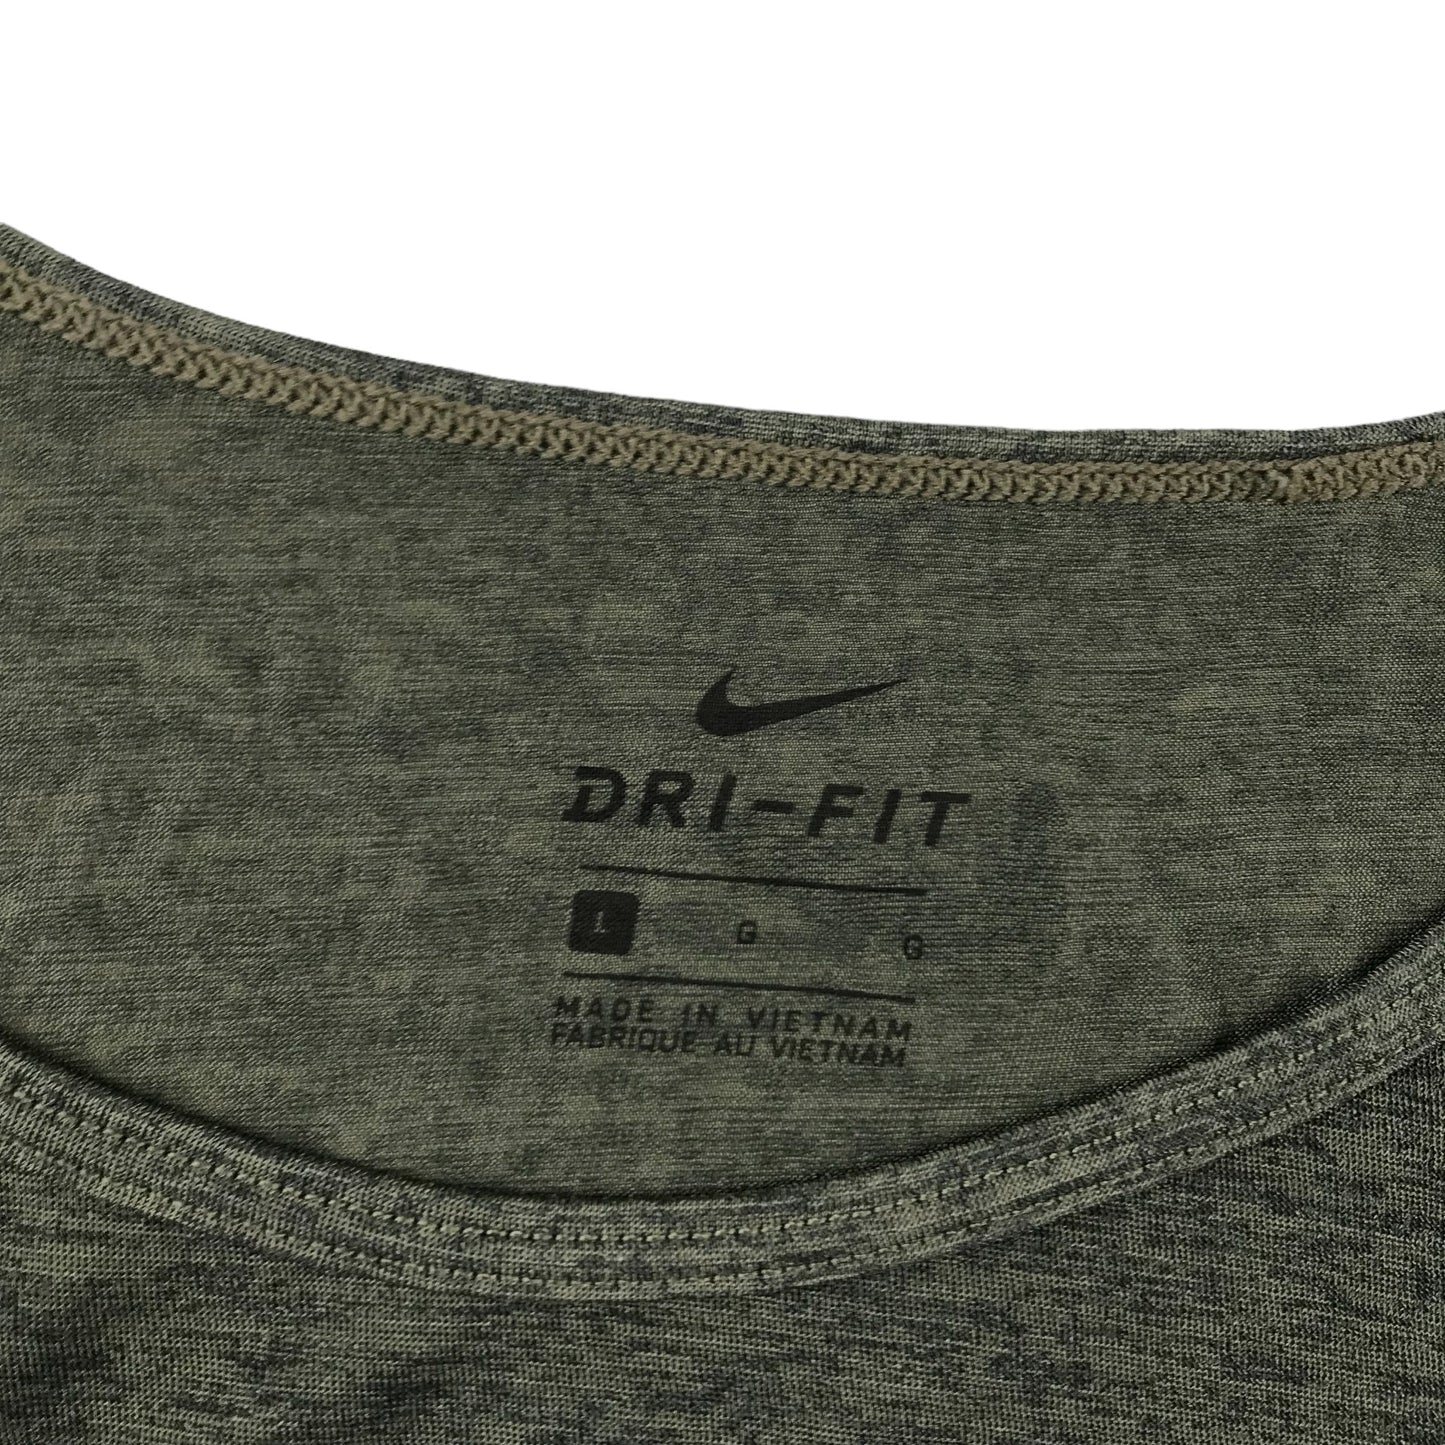 Nike T-shirt Size Women L Dark Grey Slightly Cropped Sporty Tee